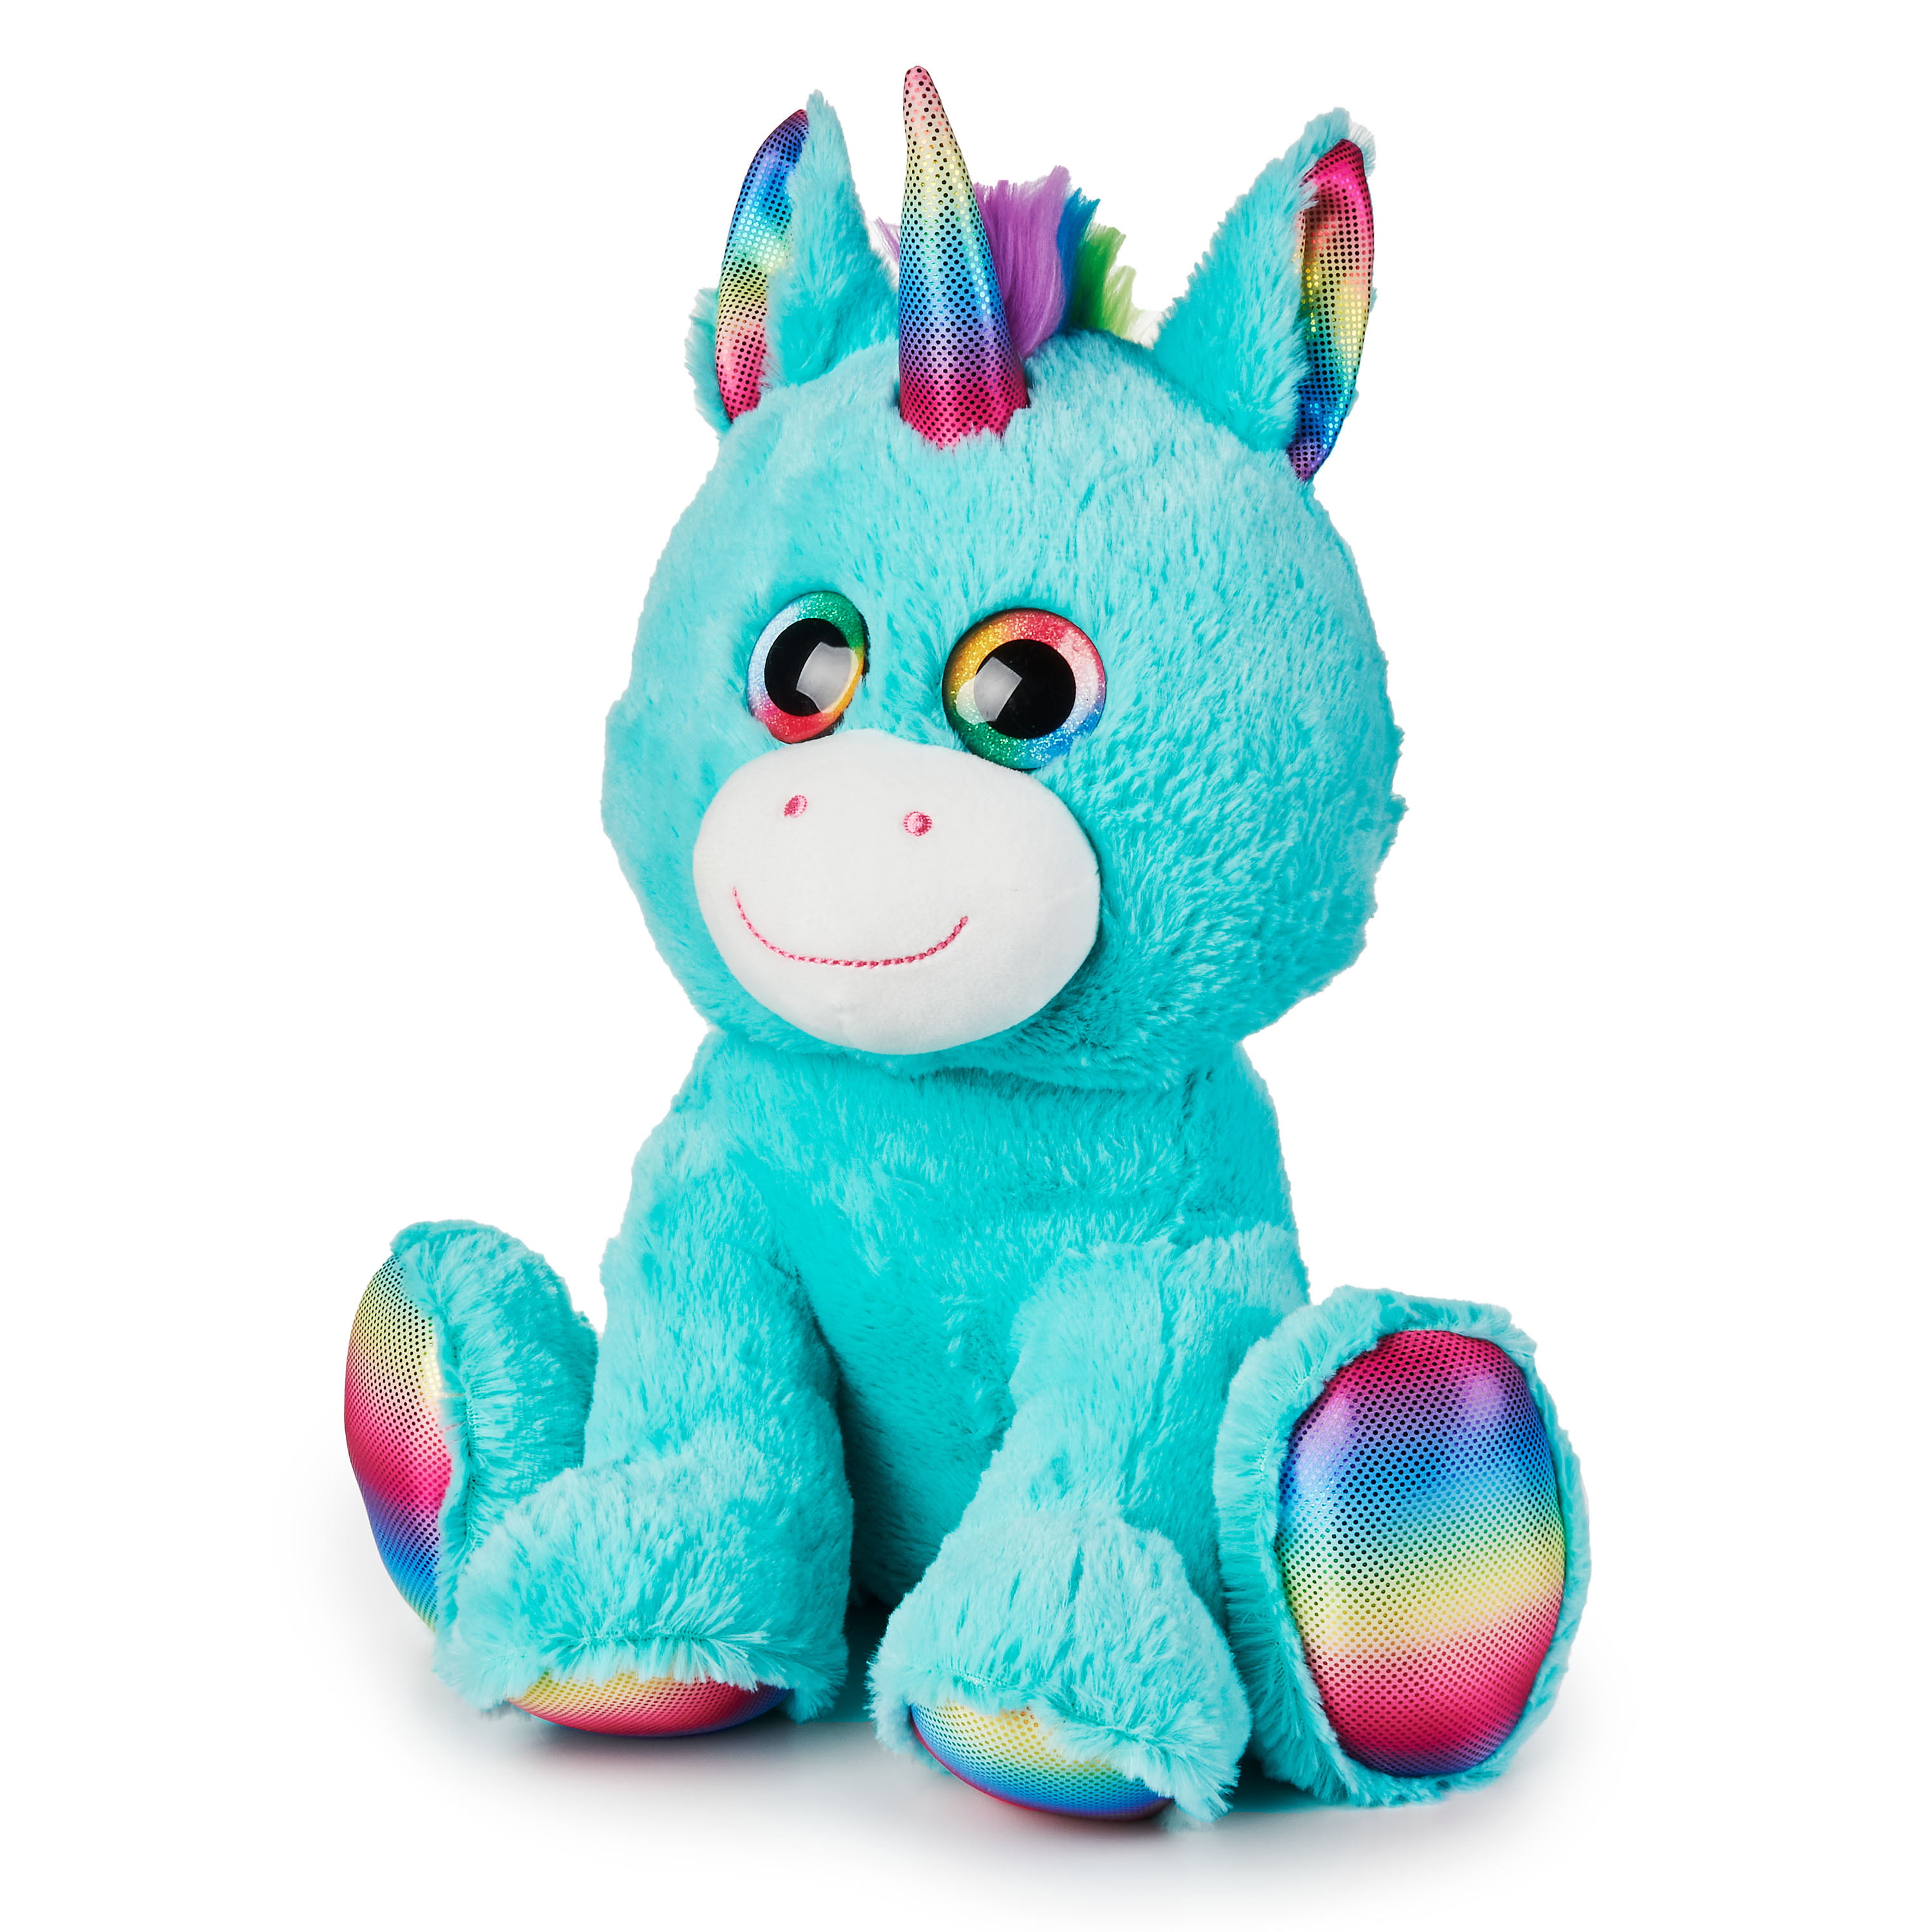 Heavenly Unicorn Sparkle Big Eye 7" Soft Plush Stuffed Animal Toy Doll For Kids 